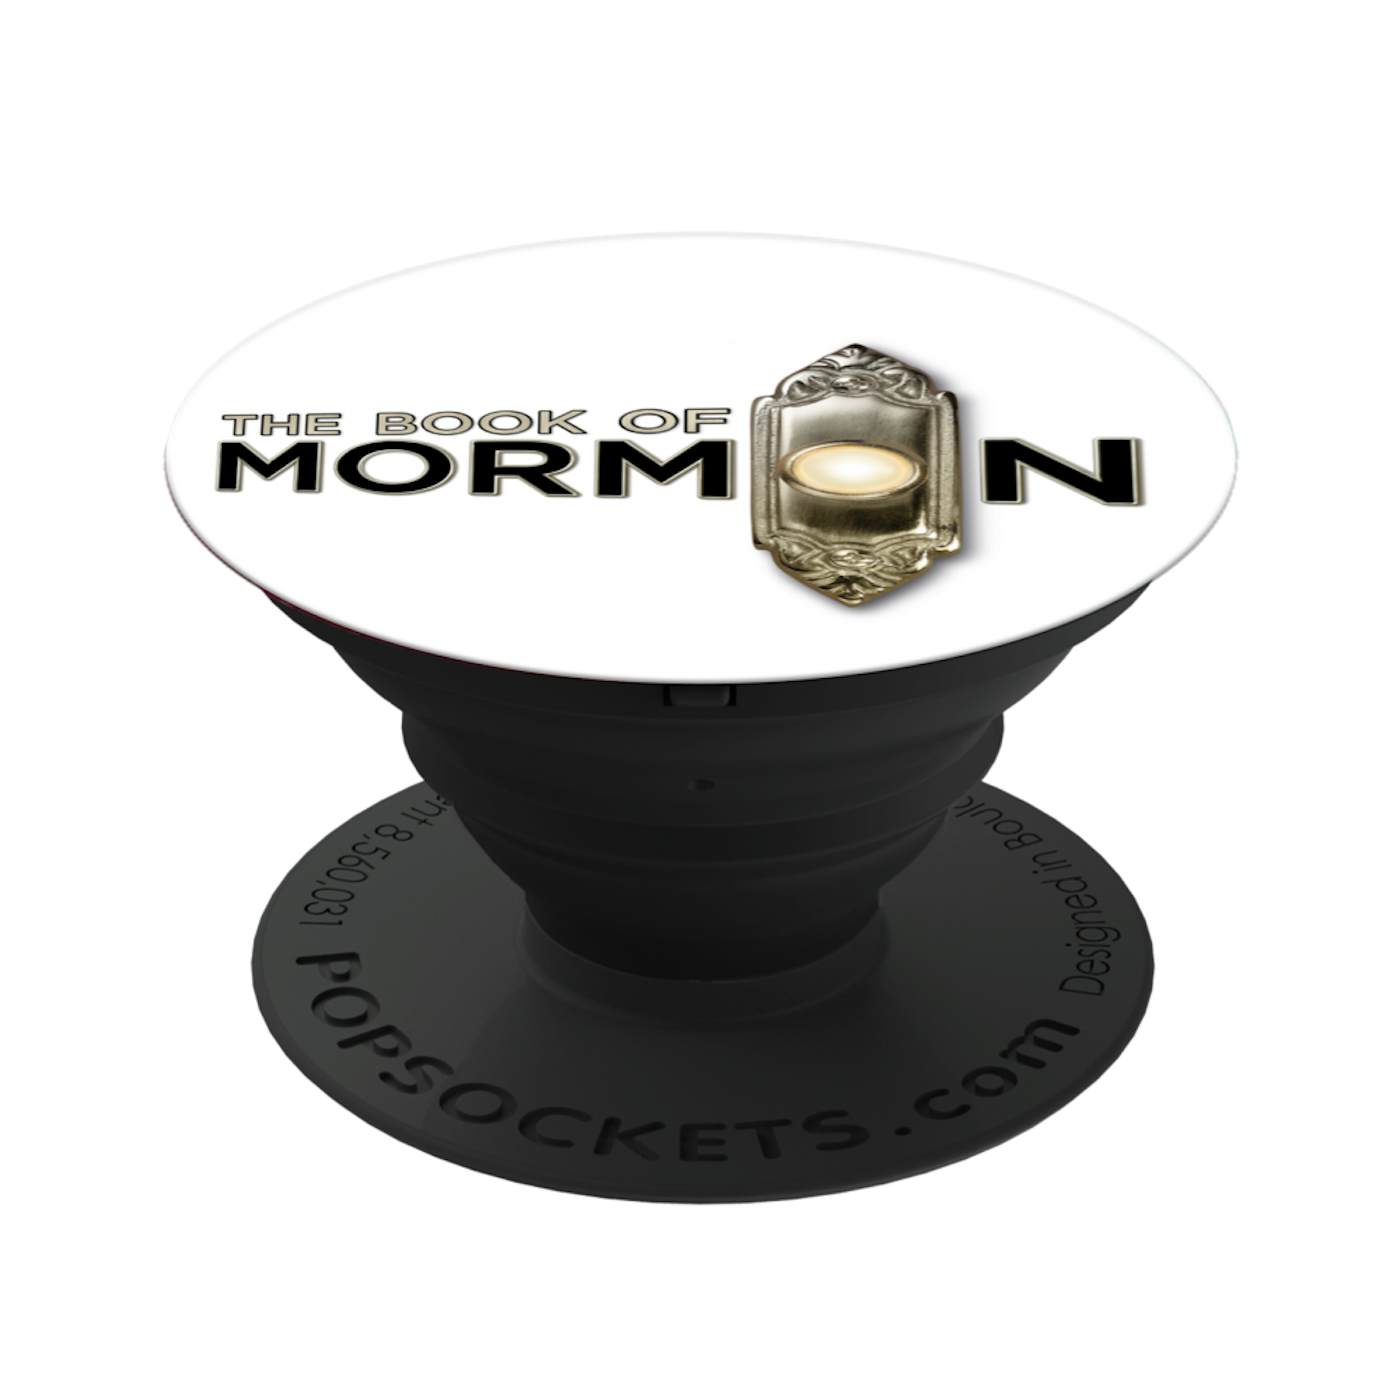 book of mormon uk tour merchandise